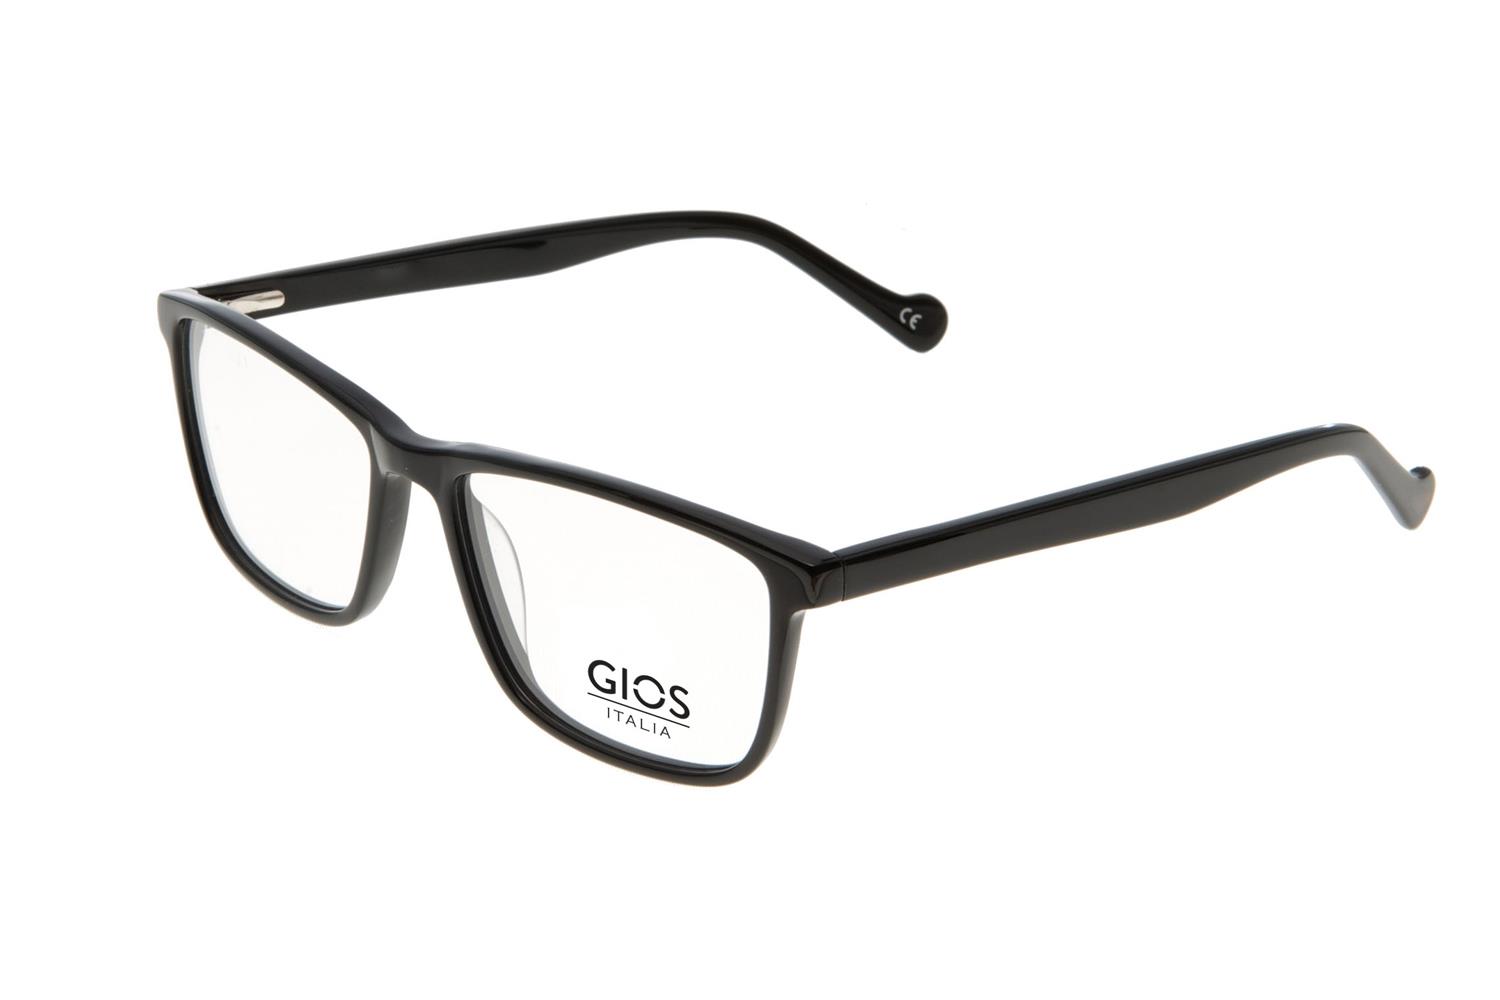 Picture of Gios Italia Eyeglasses RF500048